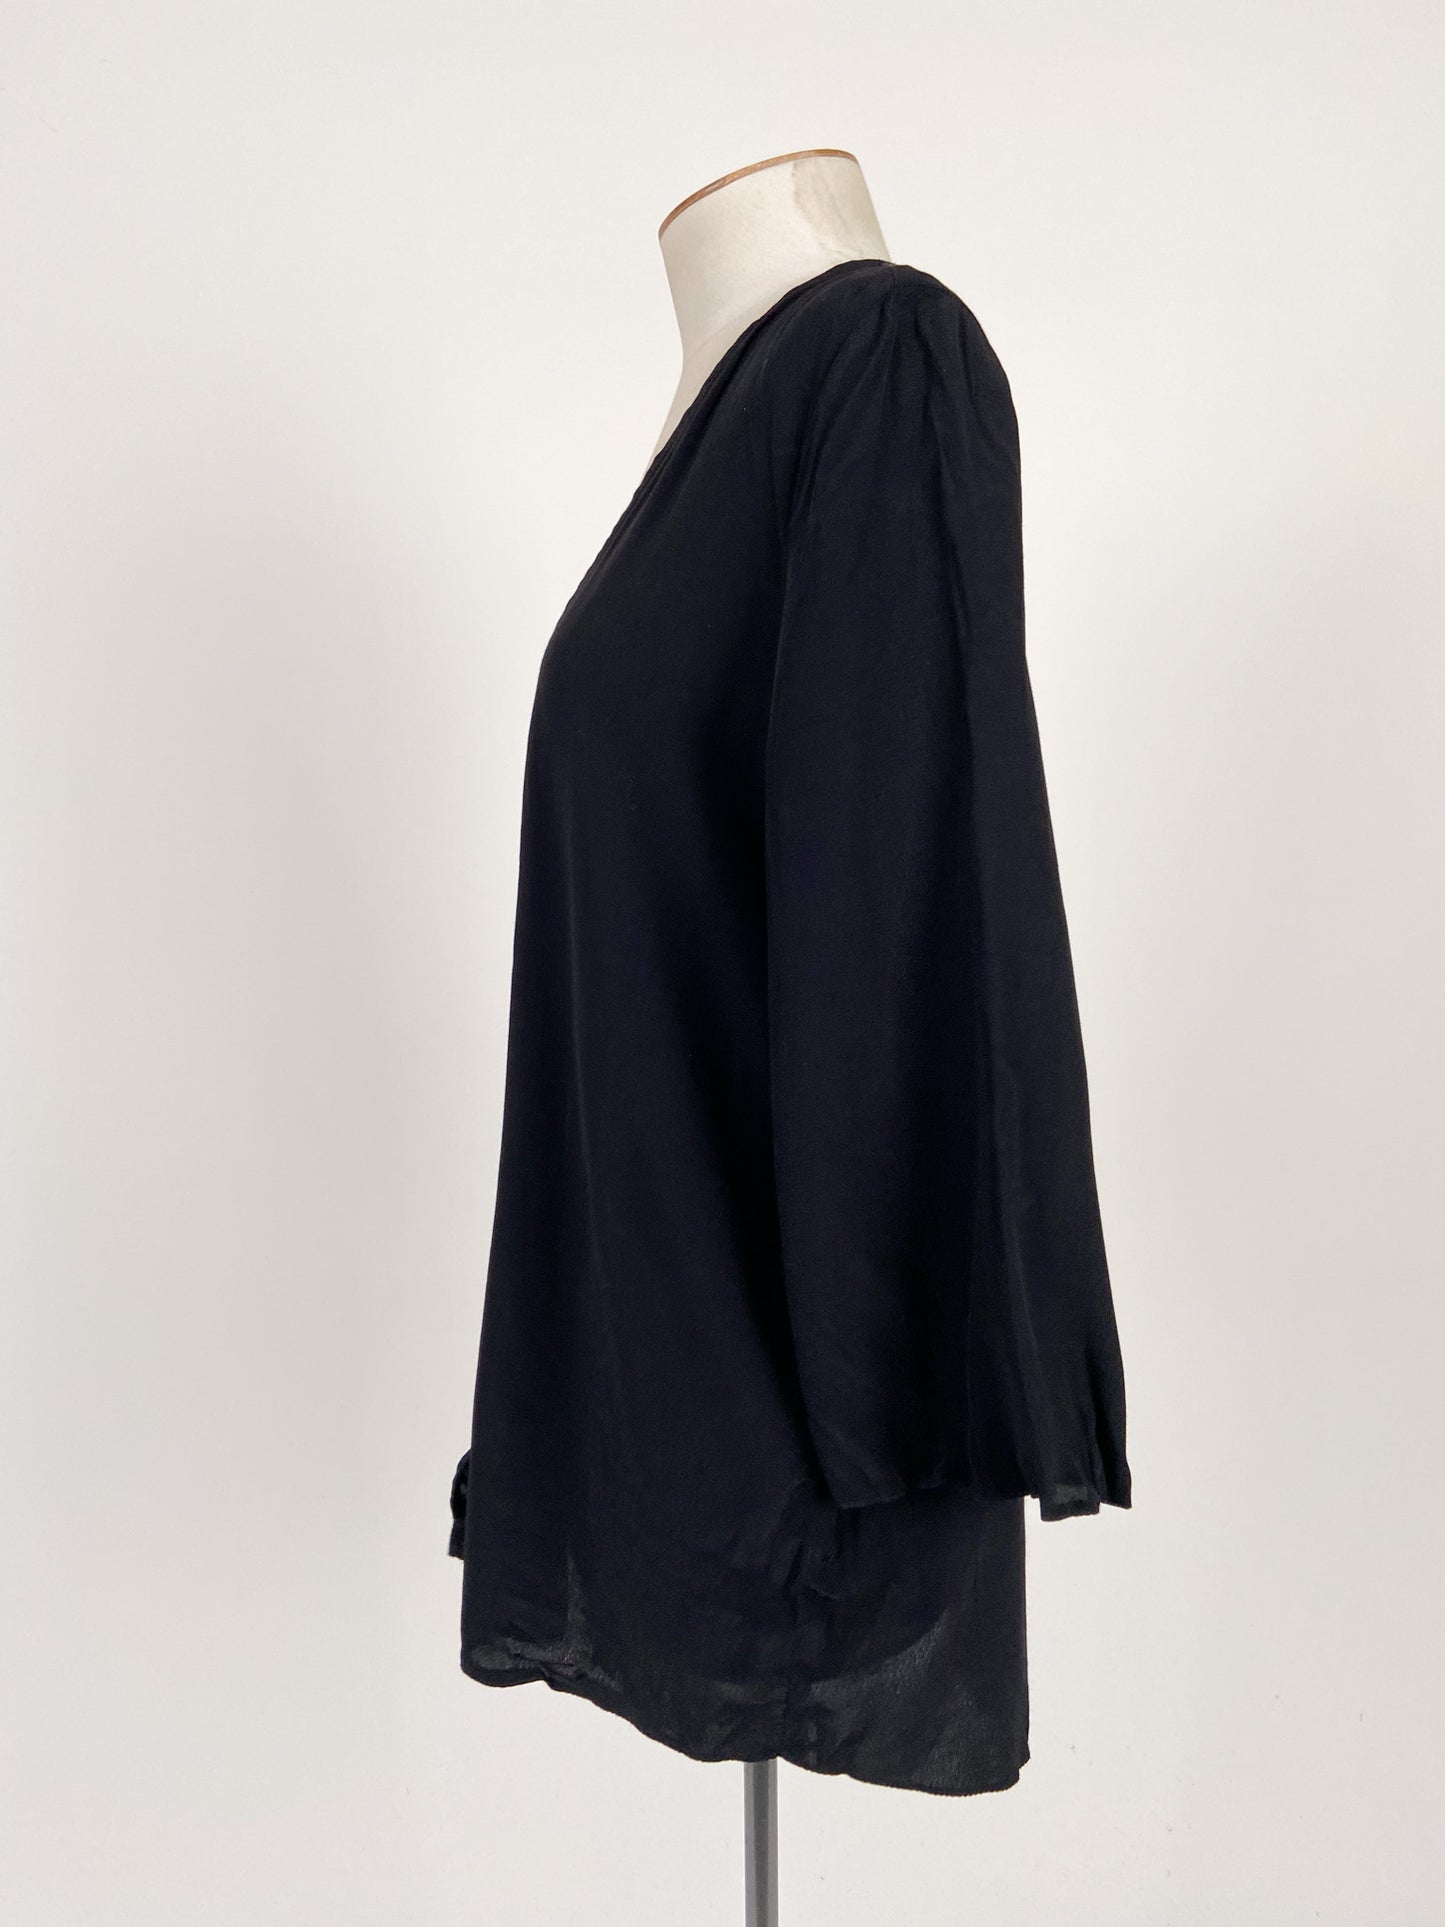 New Look | Black Casual/Workwear Cardigan | Size 8